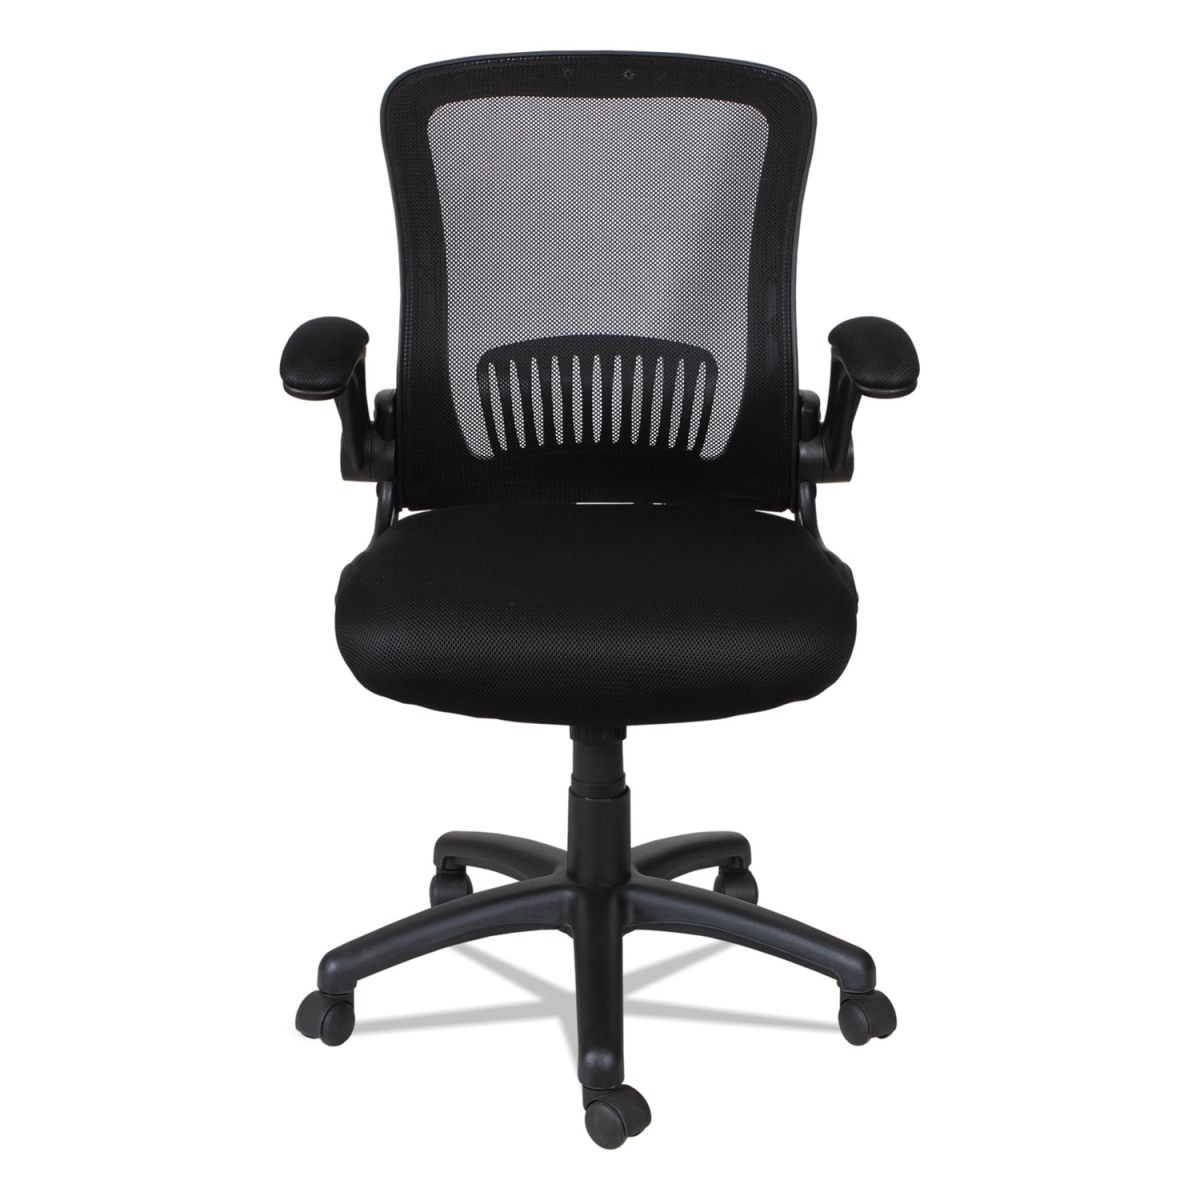 Alera Aleebe4217 Swivel & Tilt Mid-back Mesh Chair With Flip Back Arms, Black